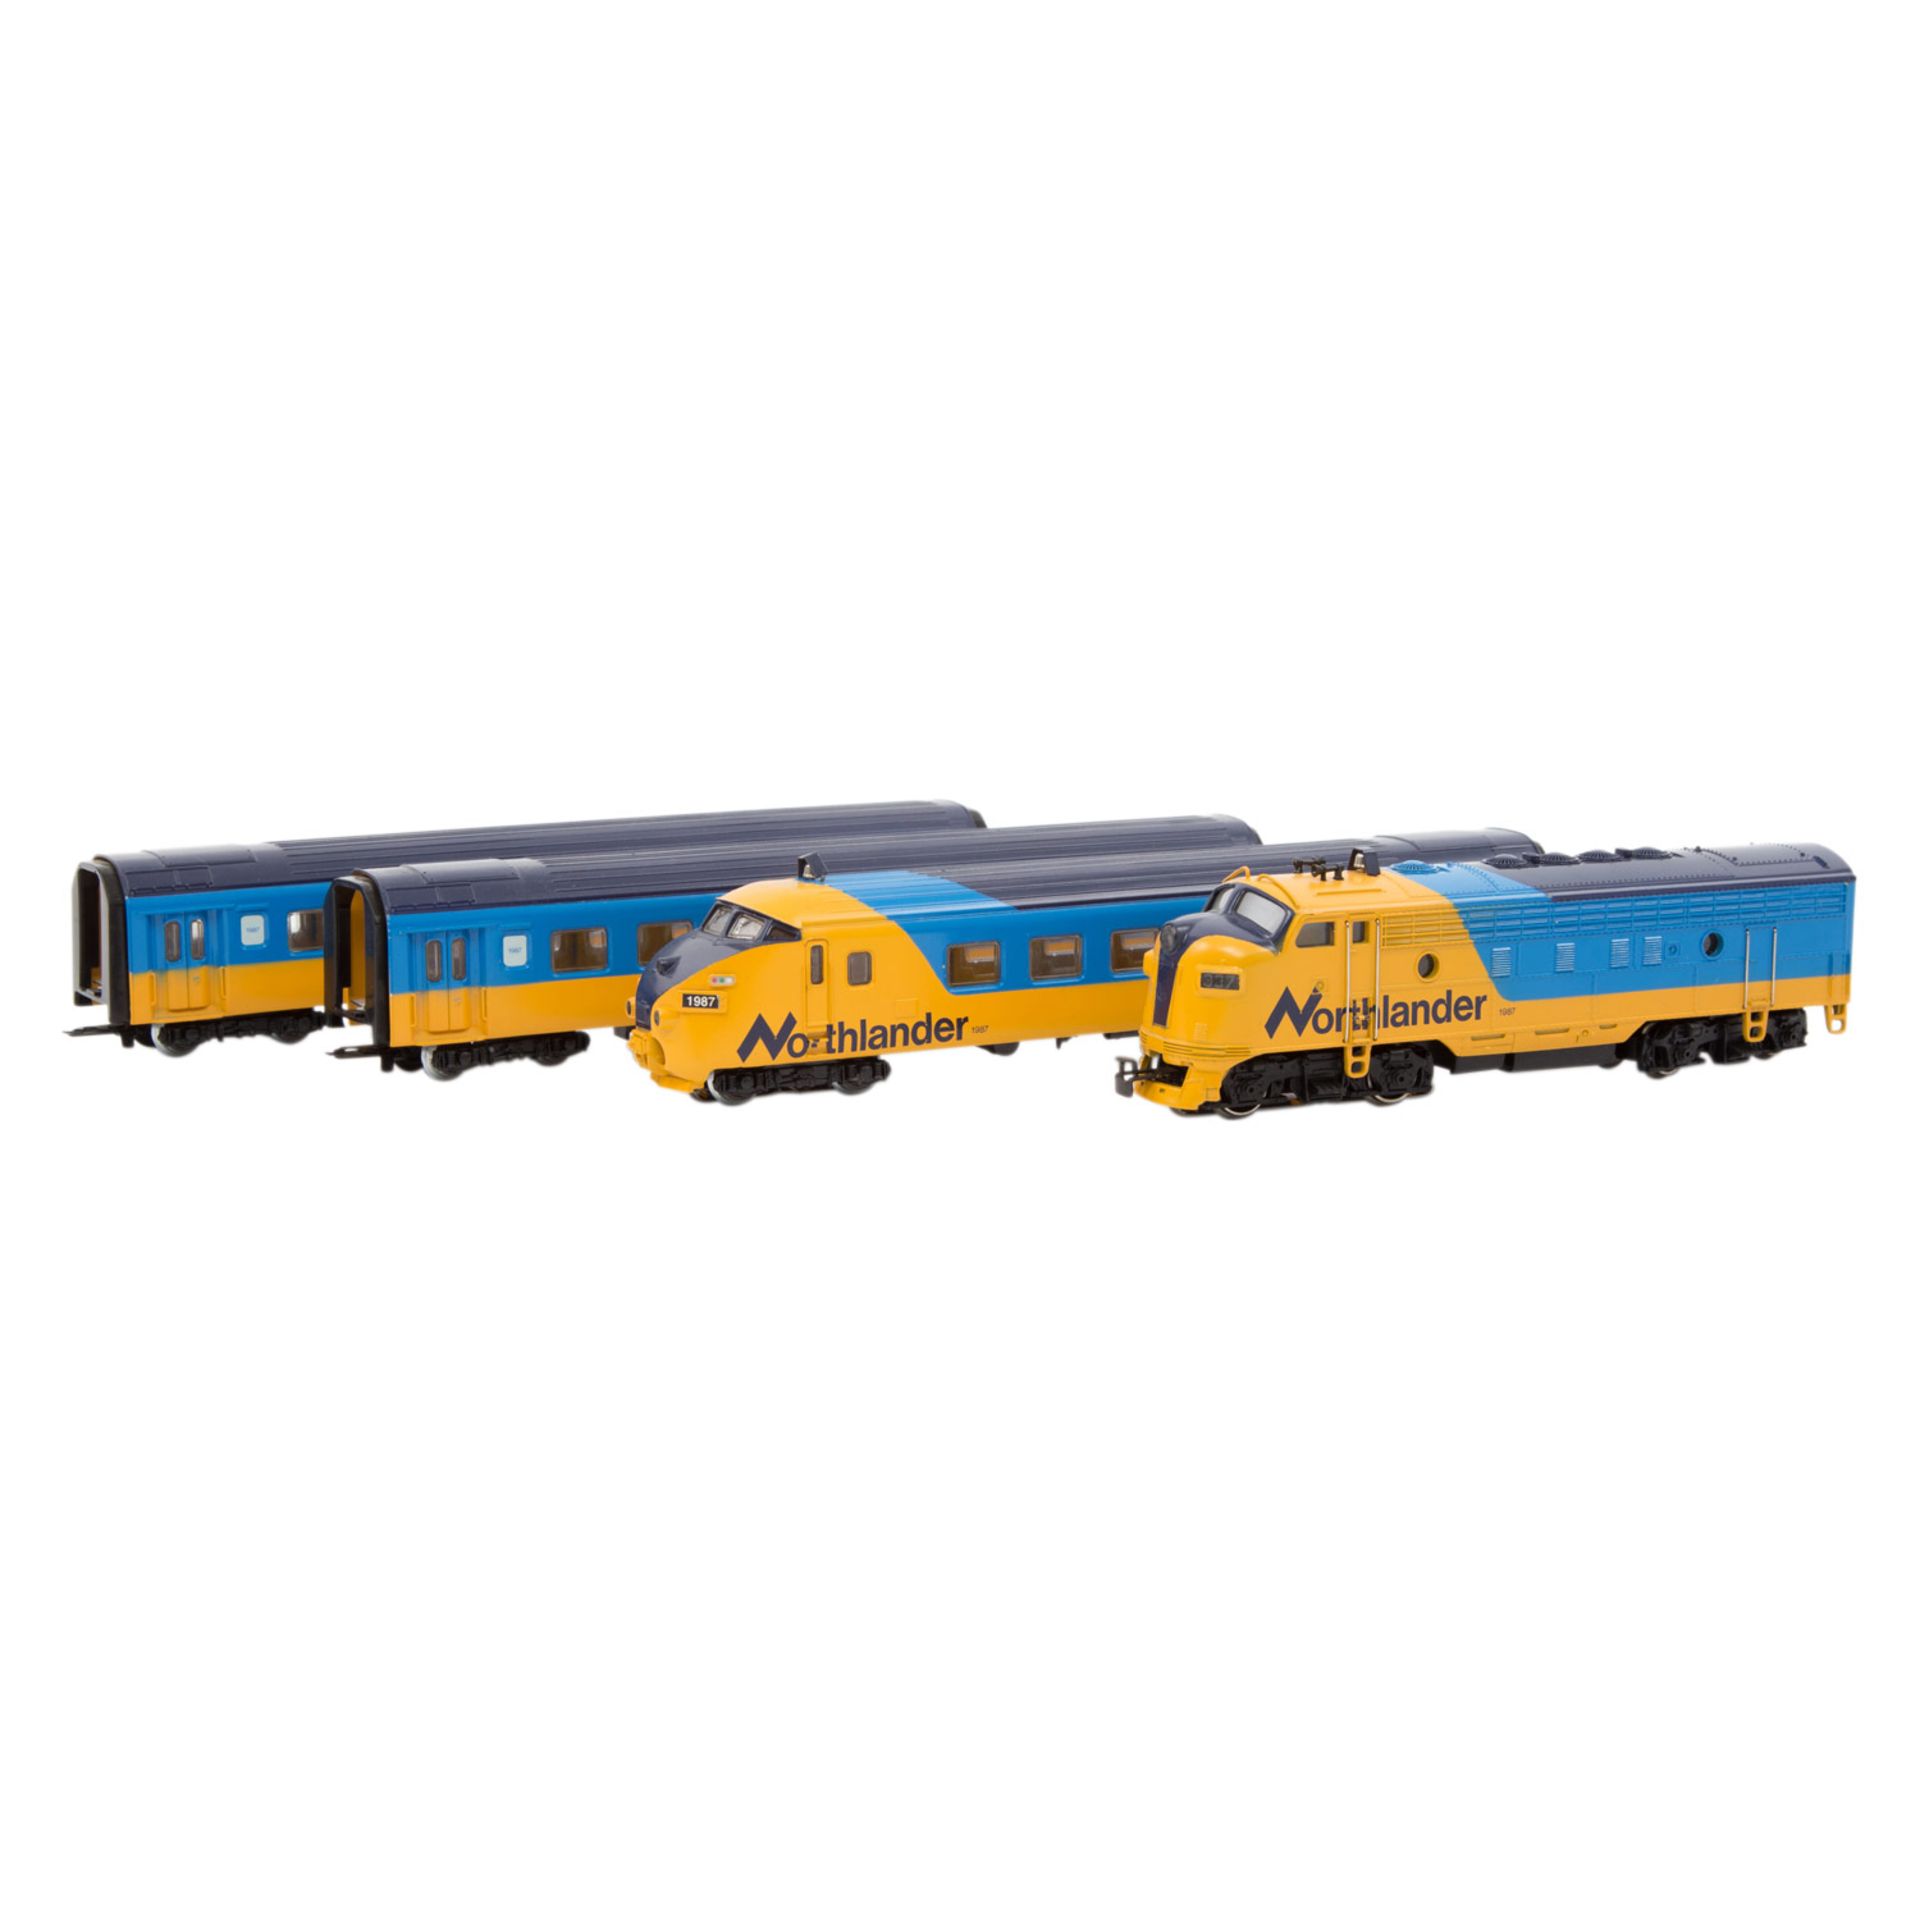 MÄRKLIN Triebwagenzug "Northlander", Spur H0, Guss- bzw. Kunststoff-Gehäuse, blau/gelb, 4-teilig,